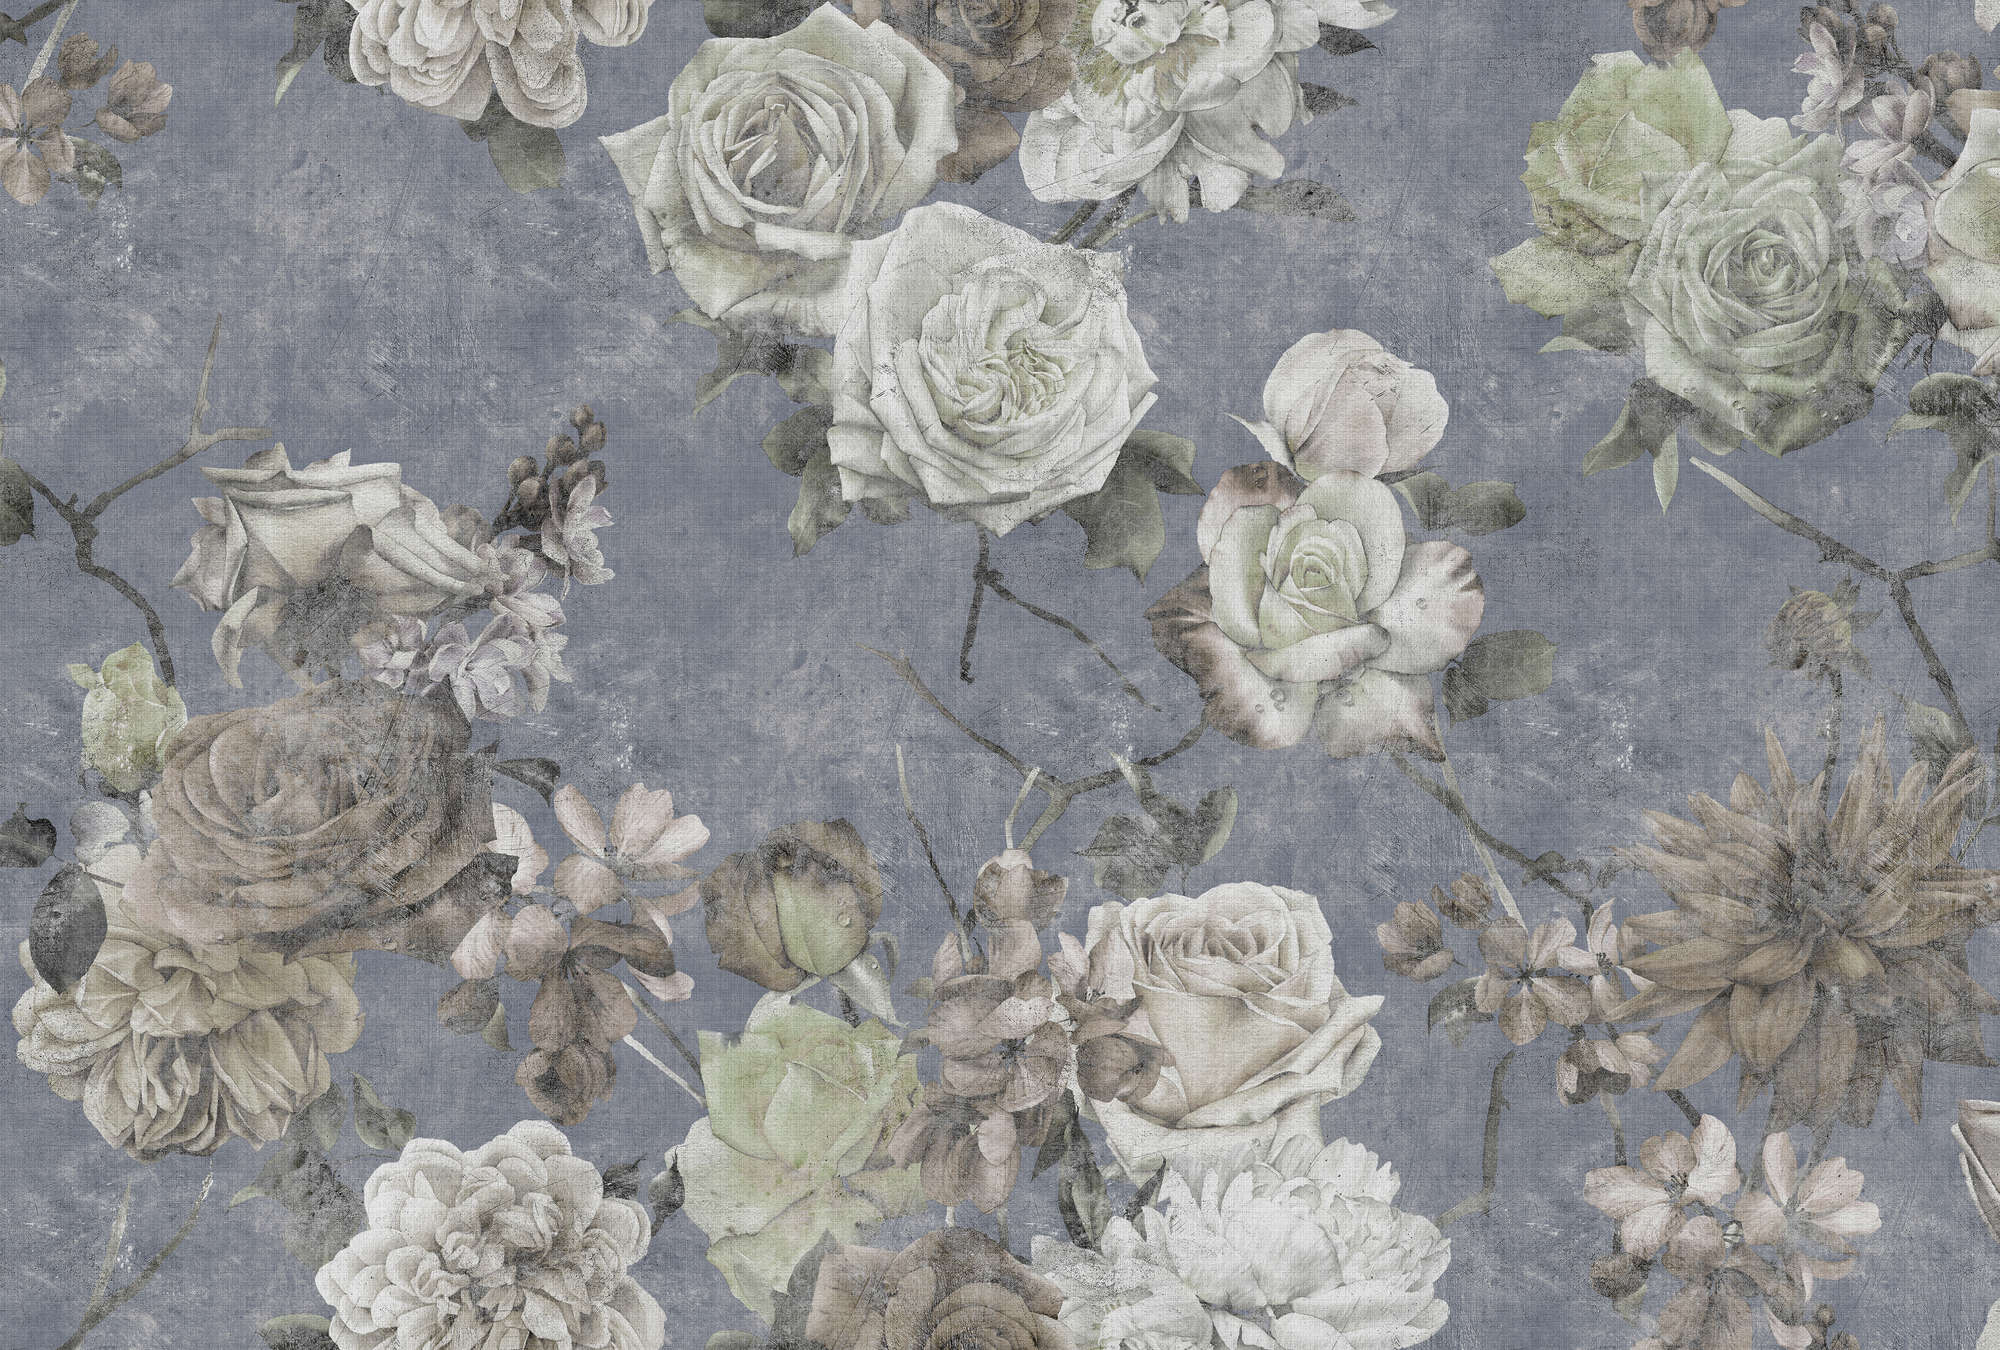             Sleeping Beauty 3 - Papier peint rose vintage - texture lin naturel - bleu, blanc | Intissé lisse mat
        